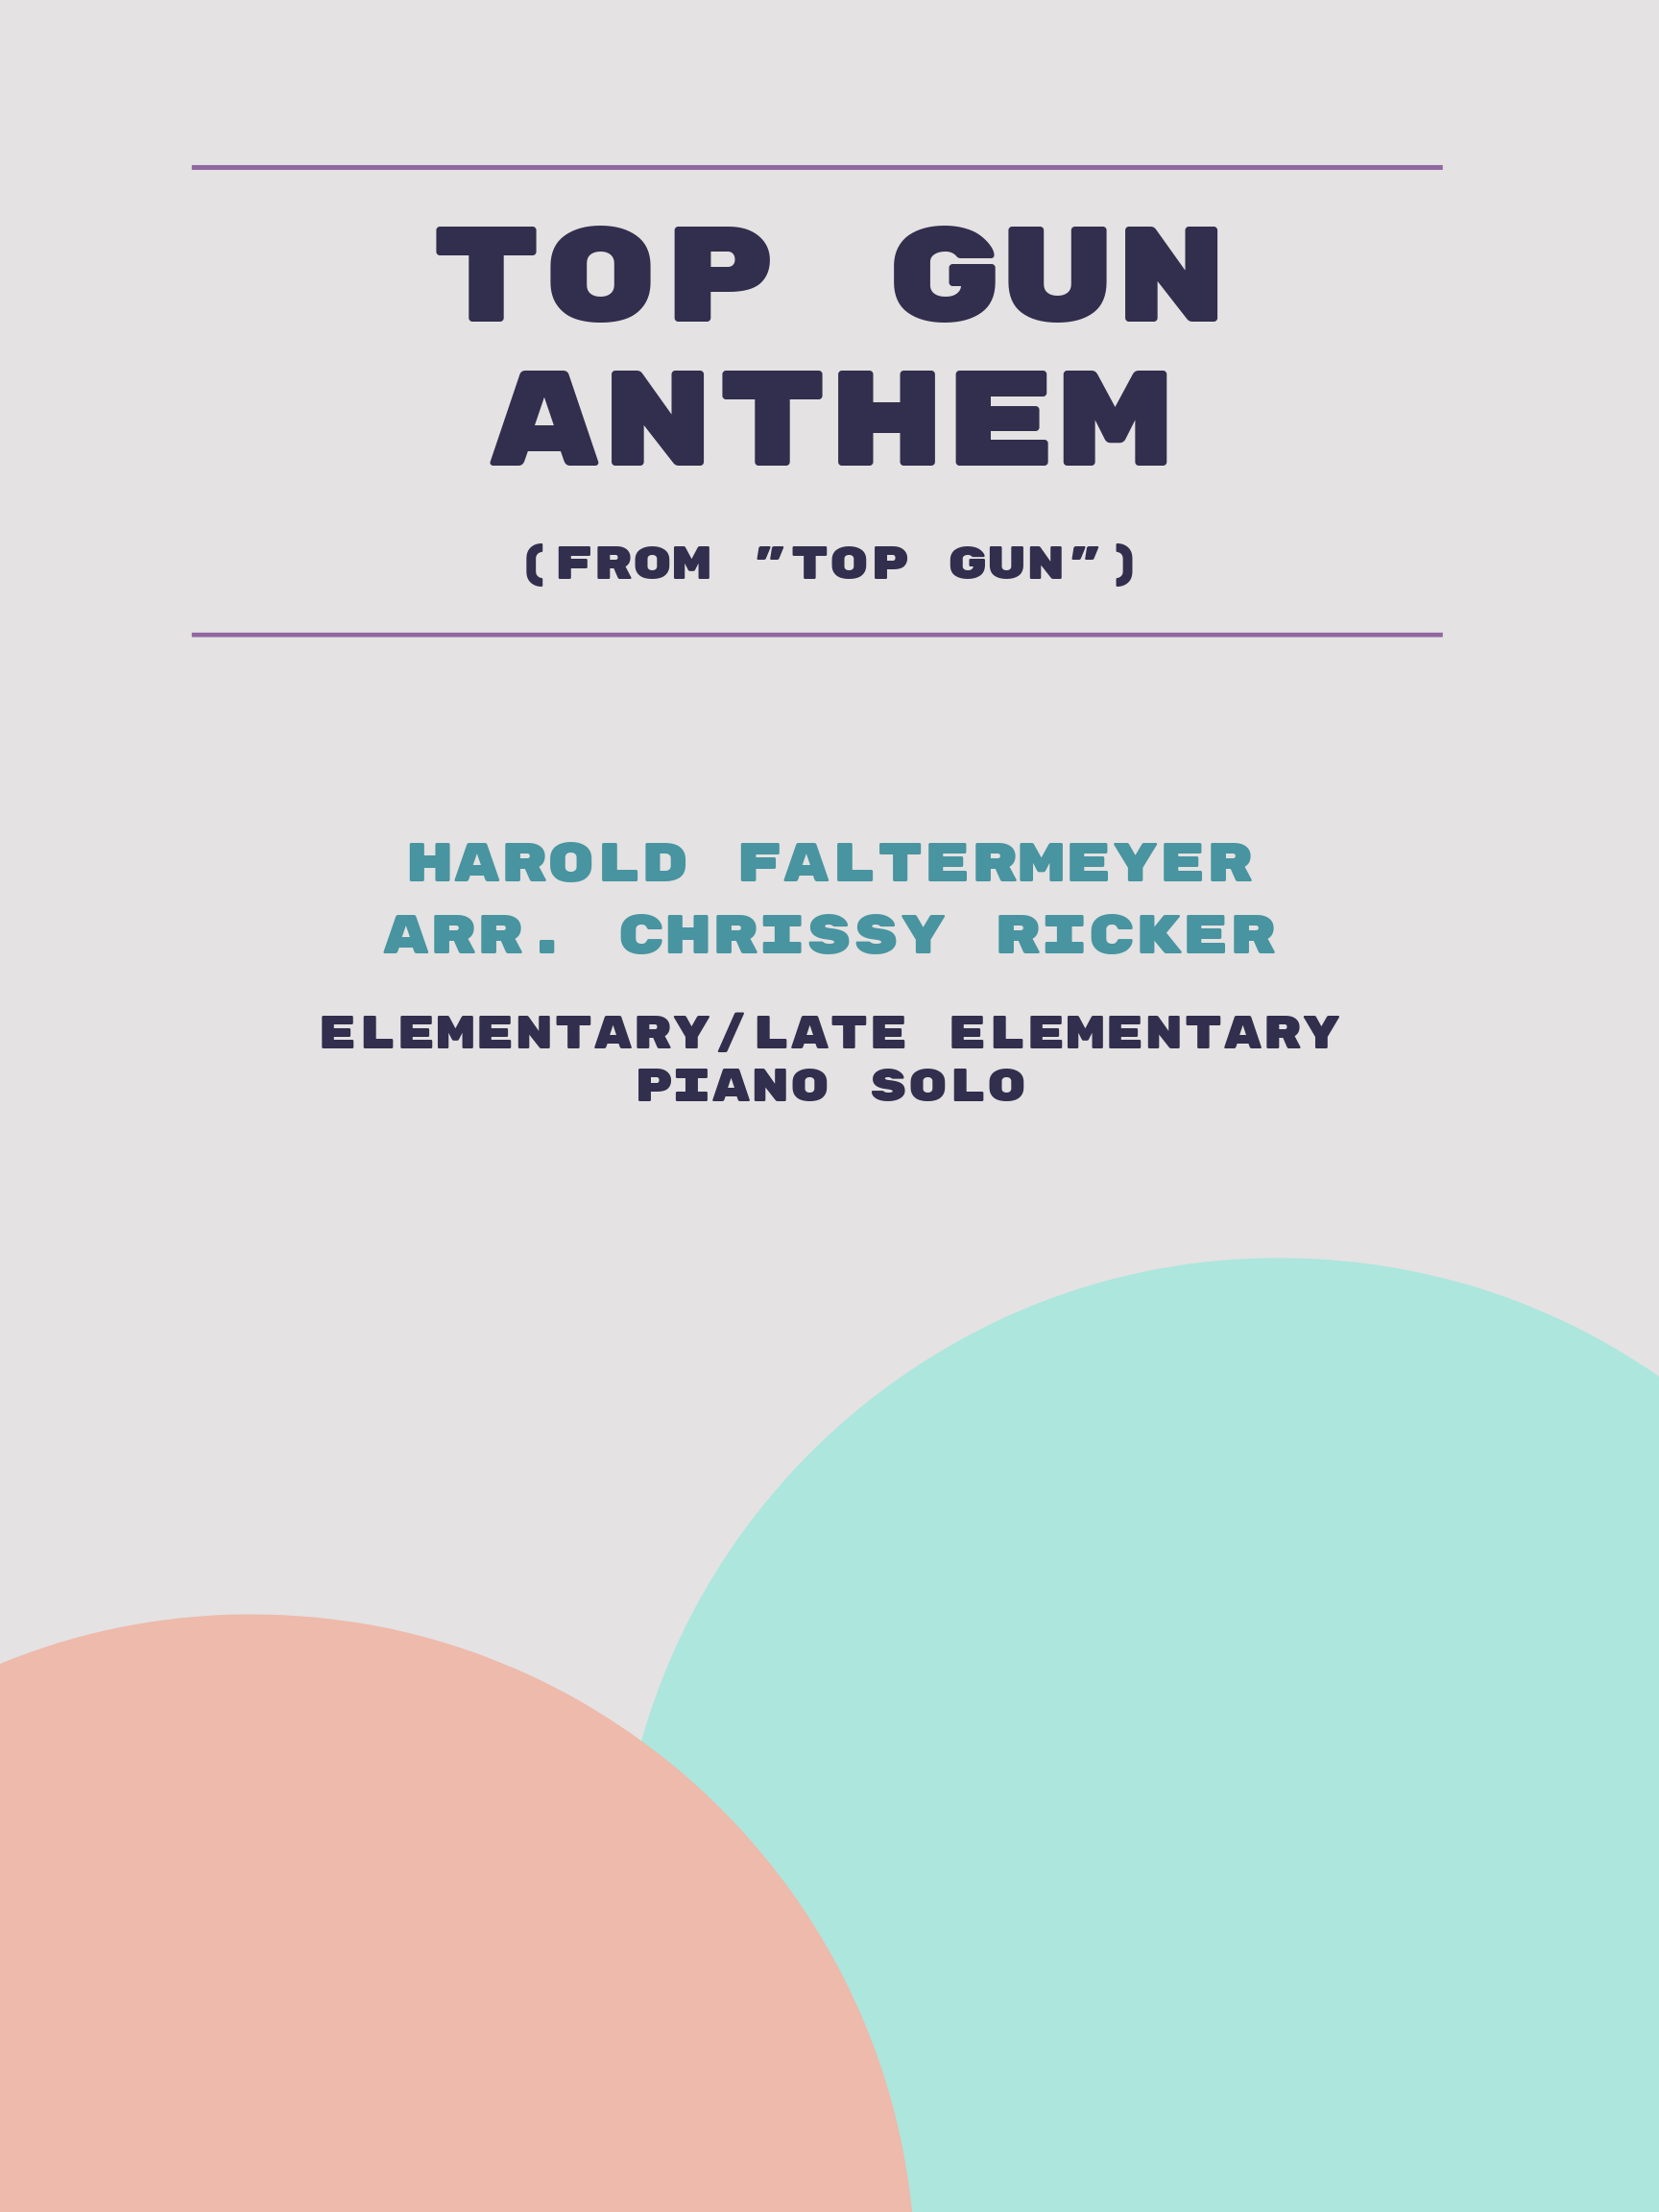 Top Gun Anthem by Harold Faltermeyer